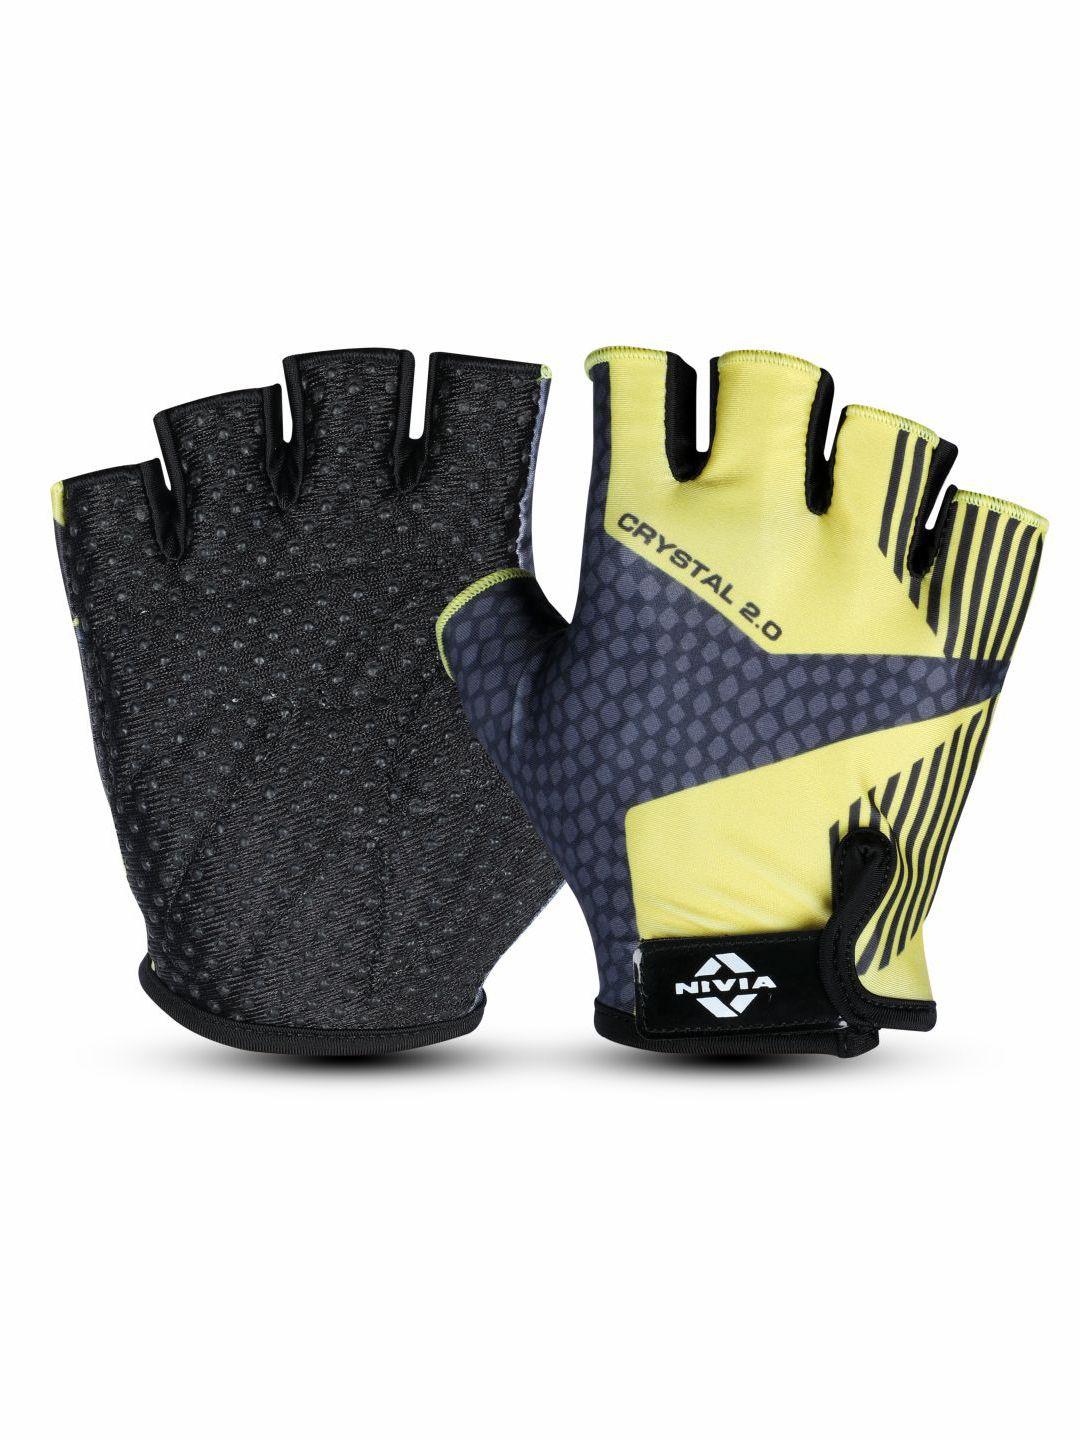 nivia unisex black & yellow fitness gloves